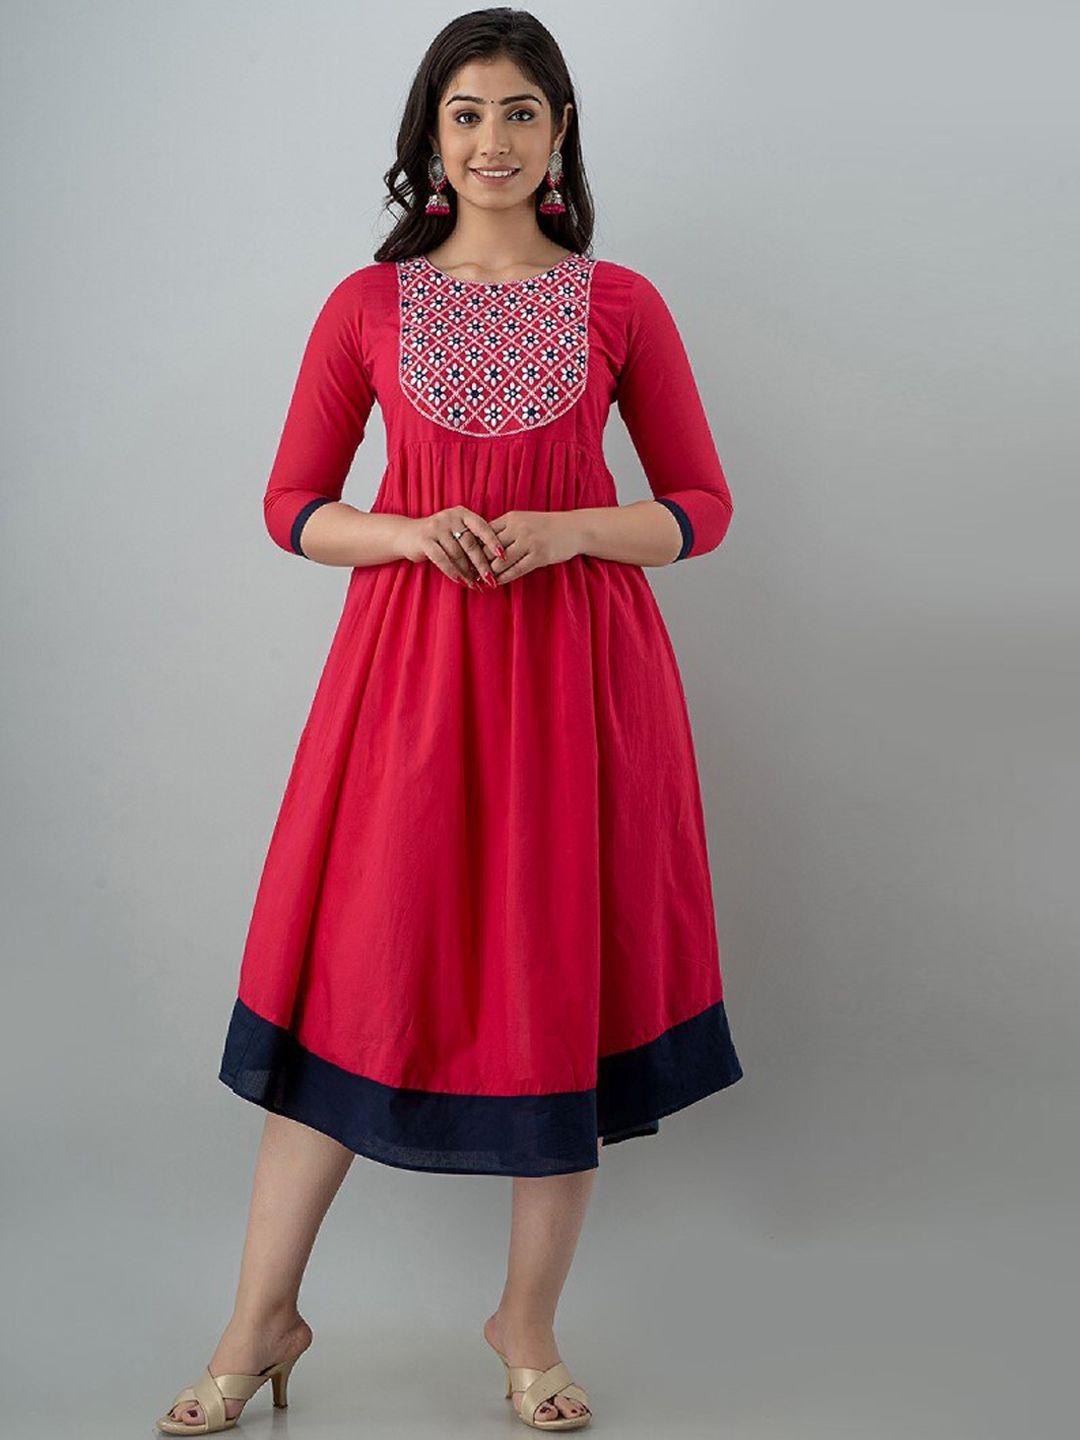 ksharaa-pink-ethnic-motifs-embroidered-midi-dress